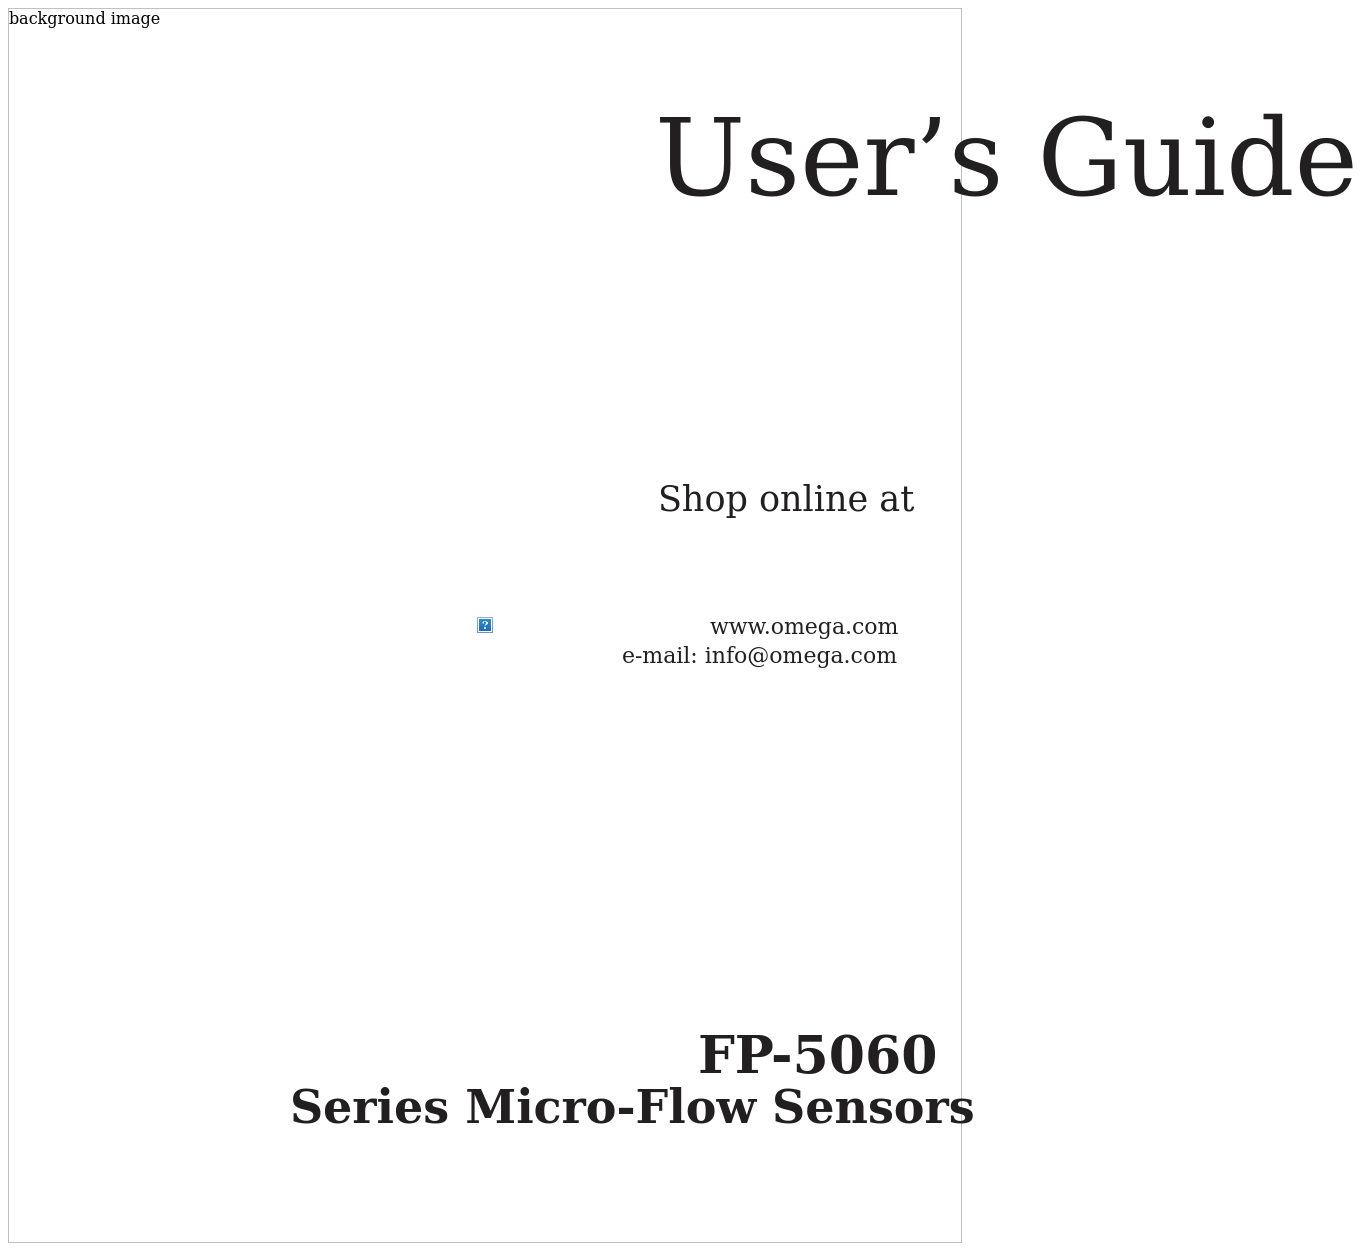 Series Micro Flow Sensor FP-5060